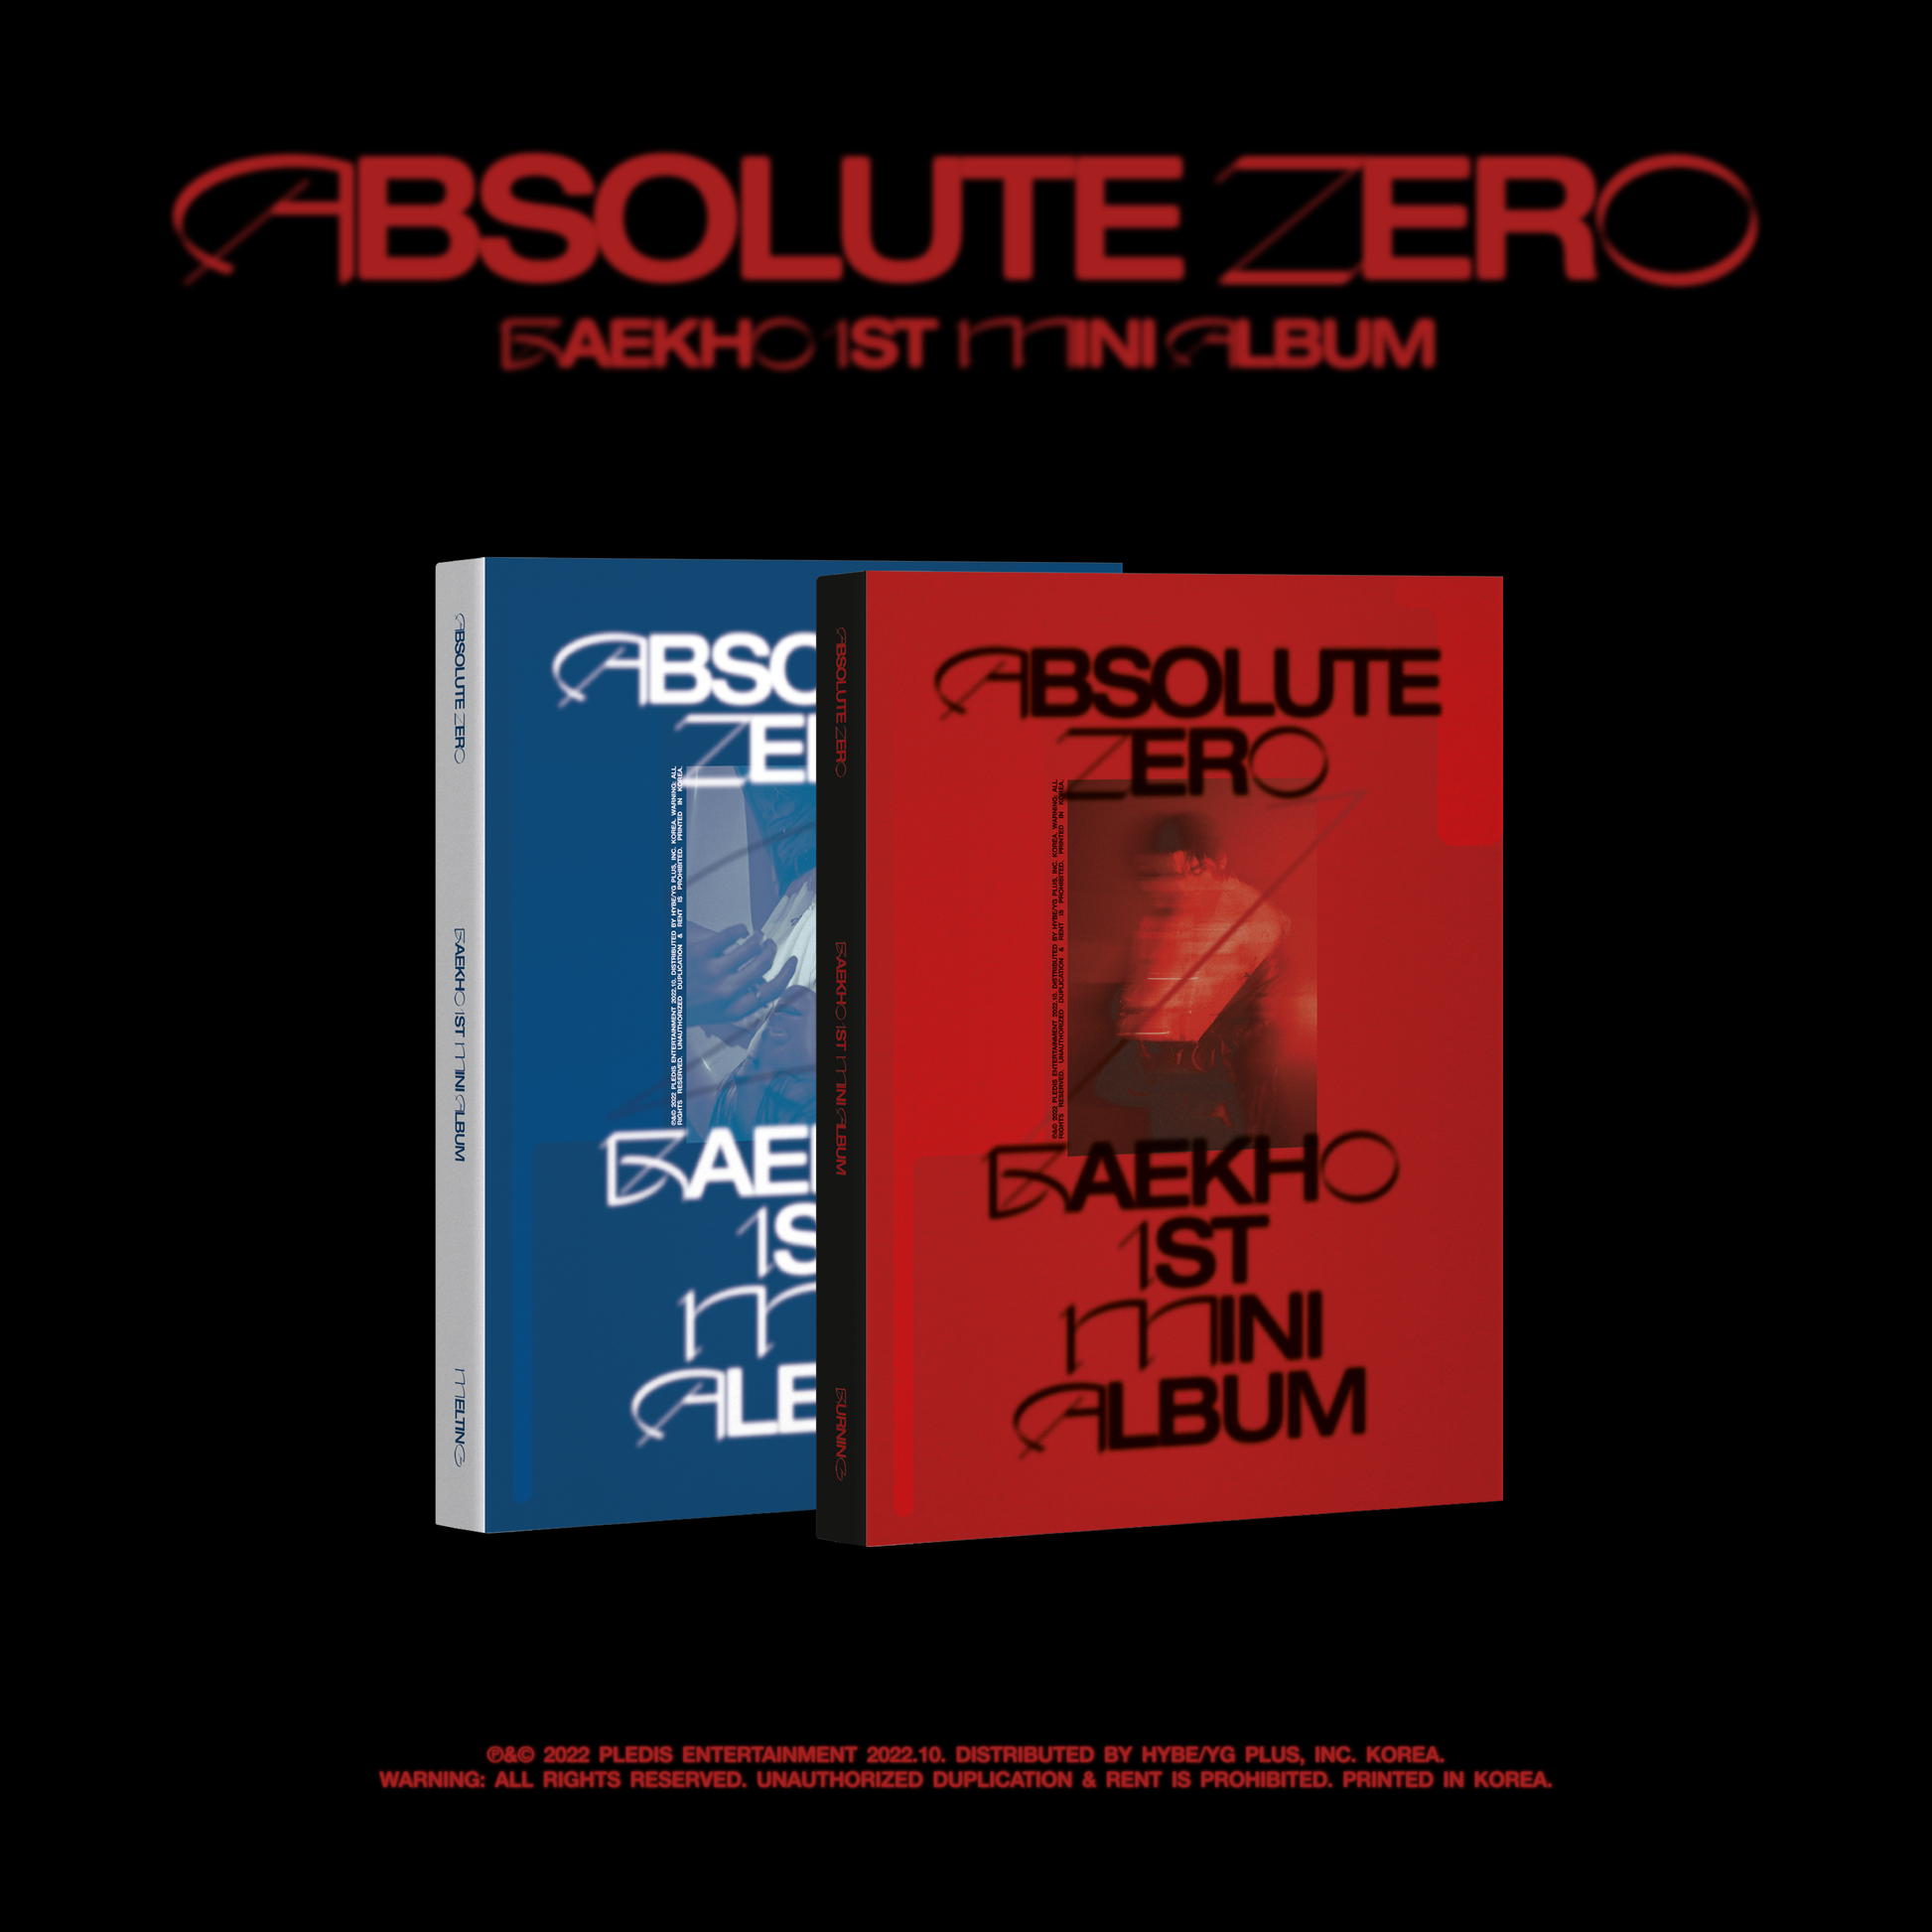 BAEKHO 1ST MINI ALBUM 'ABSOLUTE ZERO' COVER